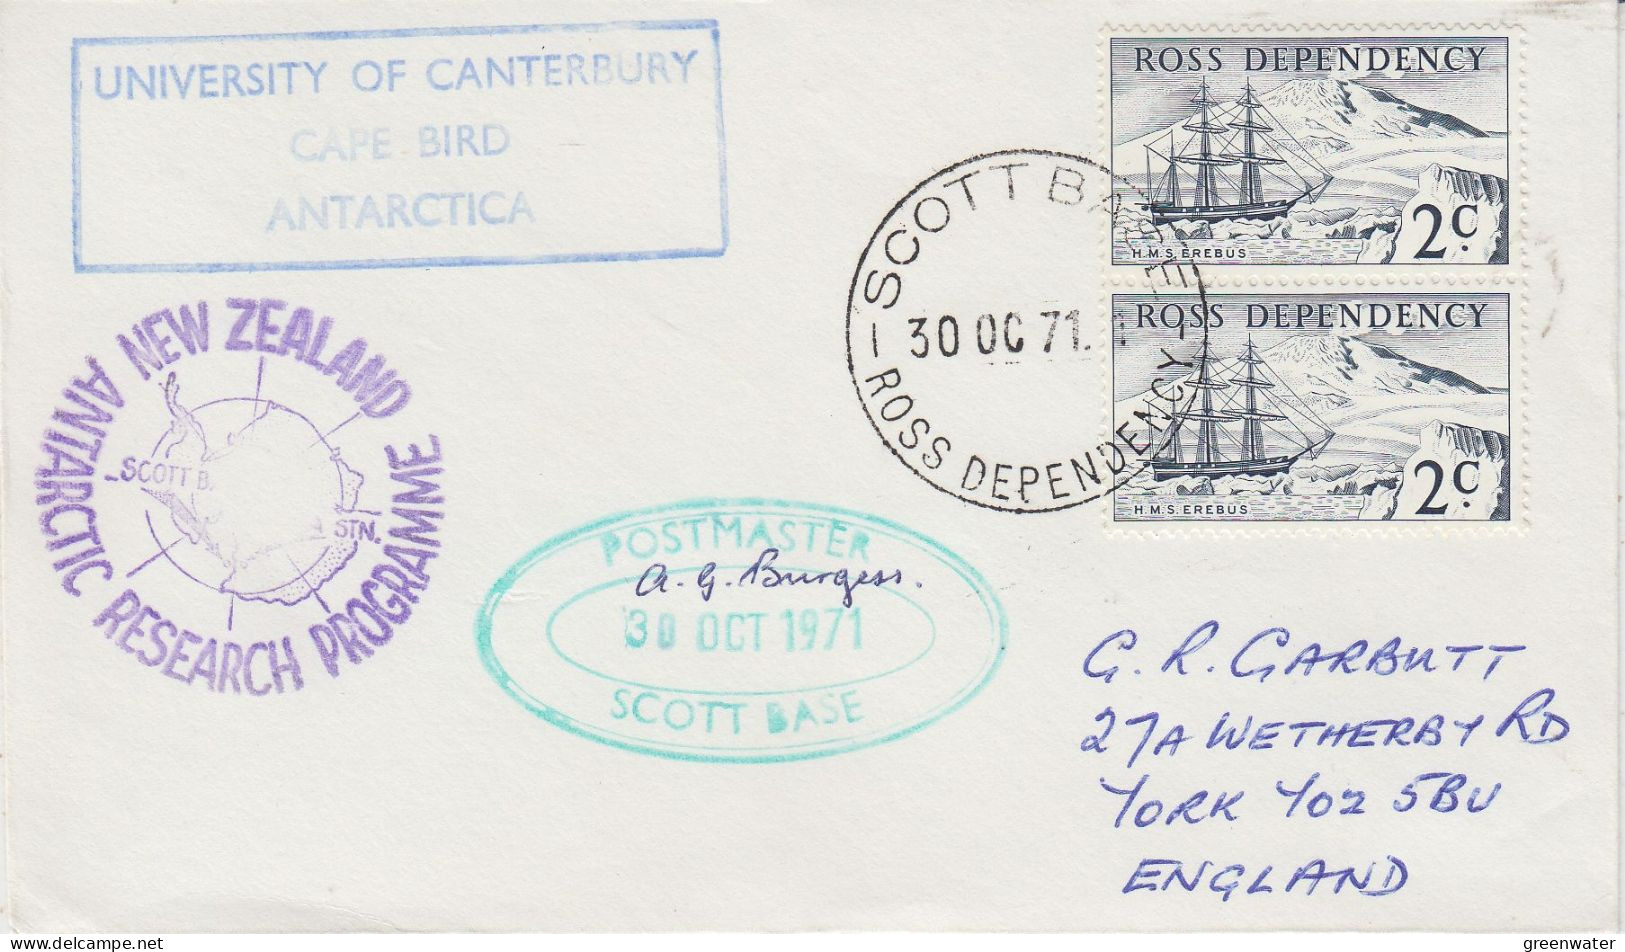 Ross Dependency University Of Canterbury Cape Bird  Signature Postmaster Scott Base  Ca Scott Base 30 OCT 1971 (SO192) - Bases Antarctiques